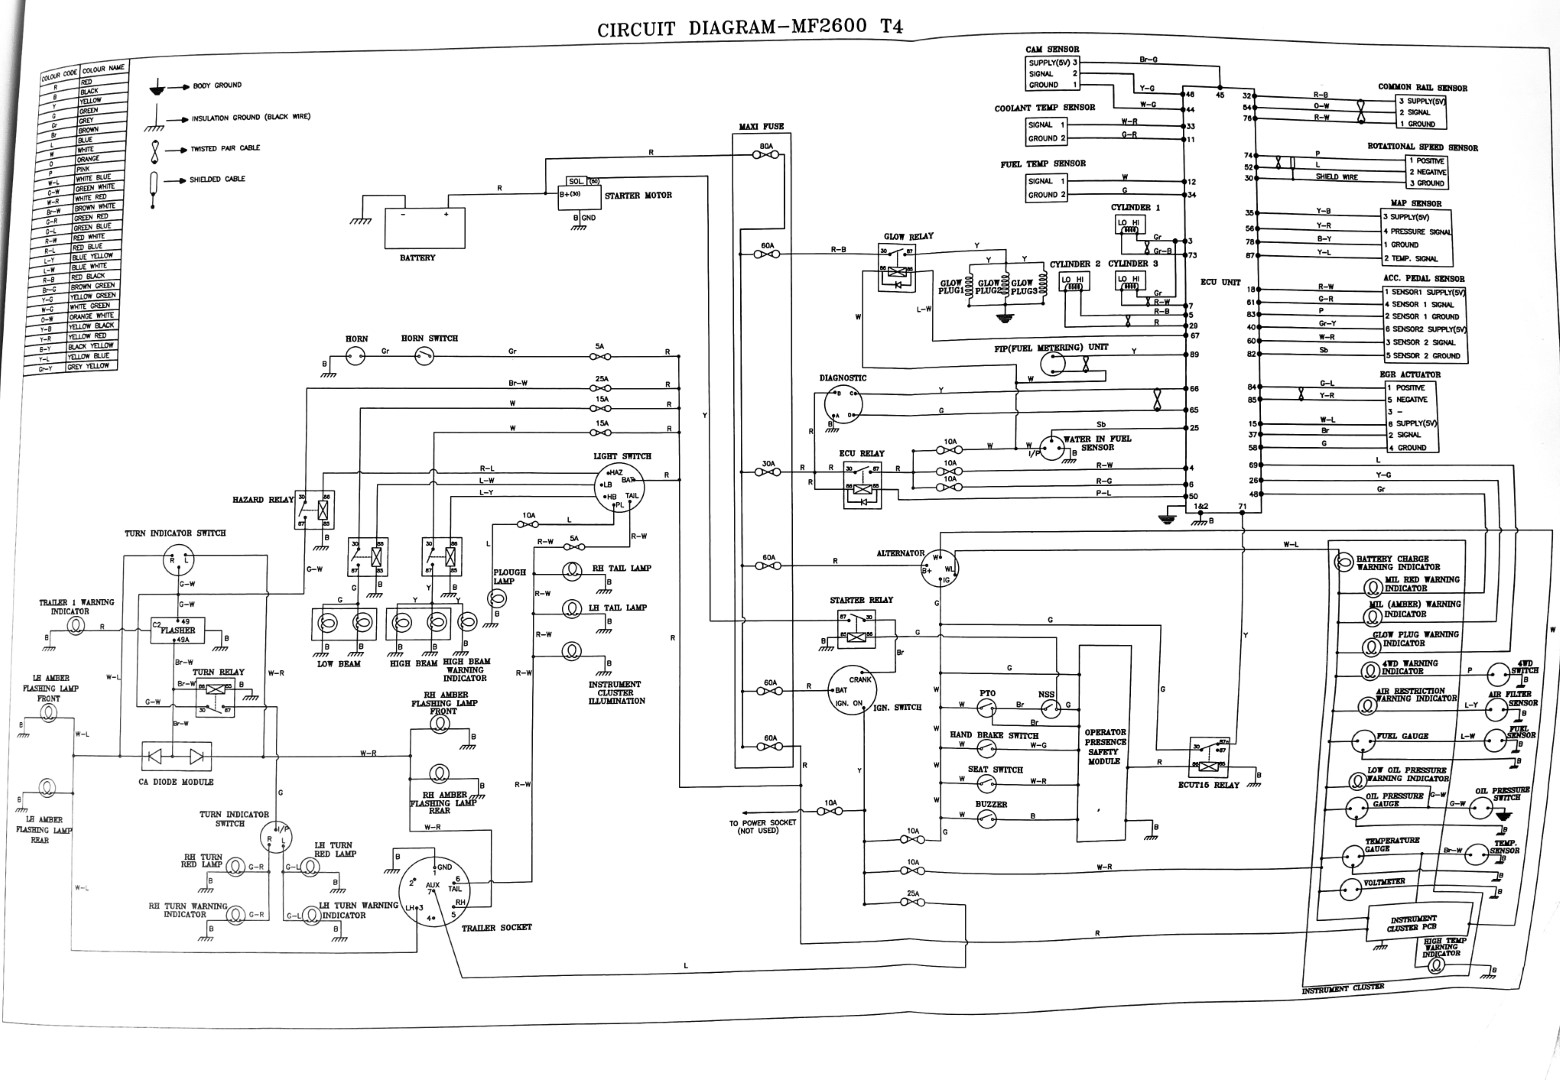 Circuit Diagram_MF2600 T4 (Large).jpg